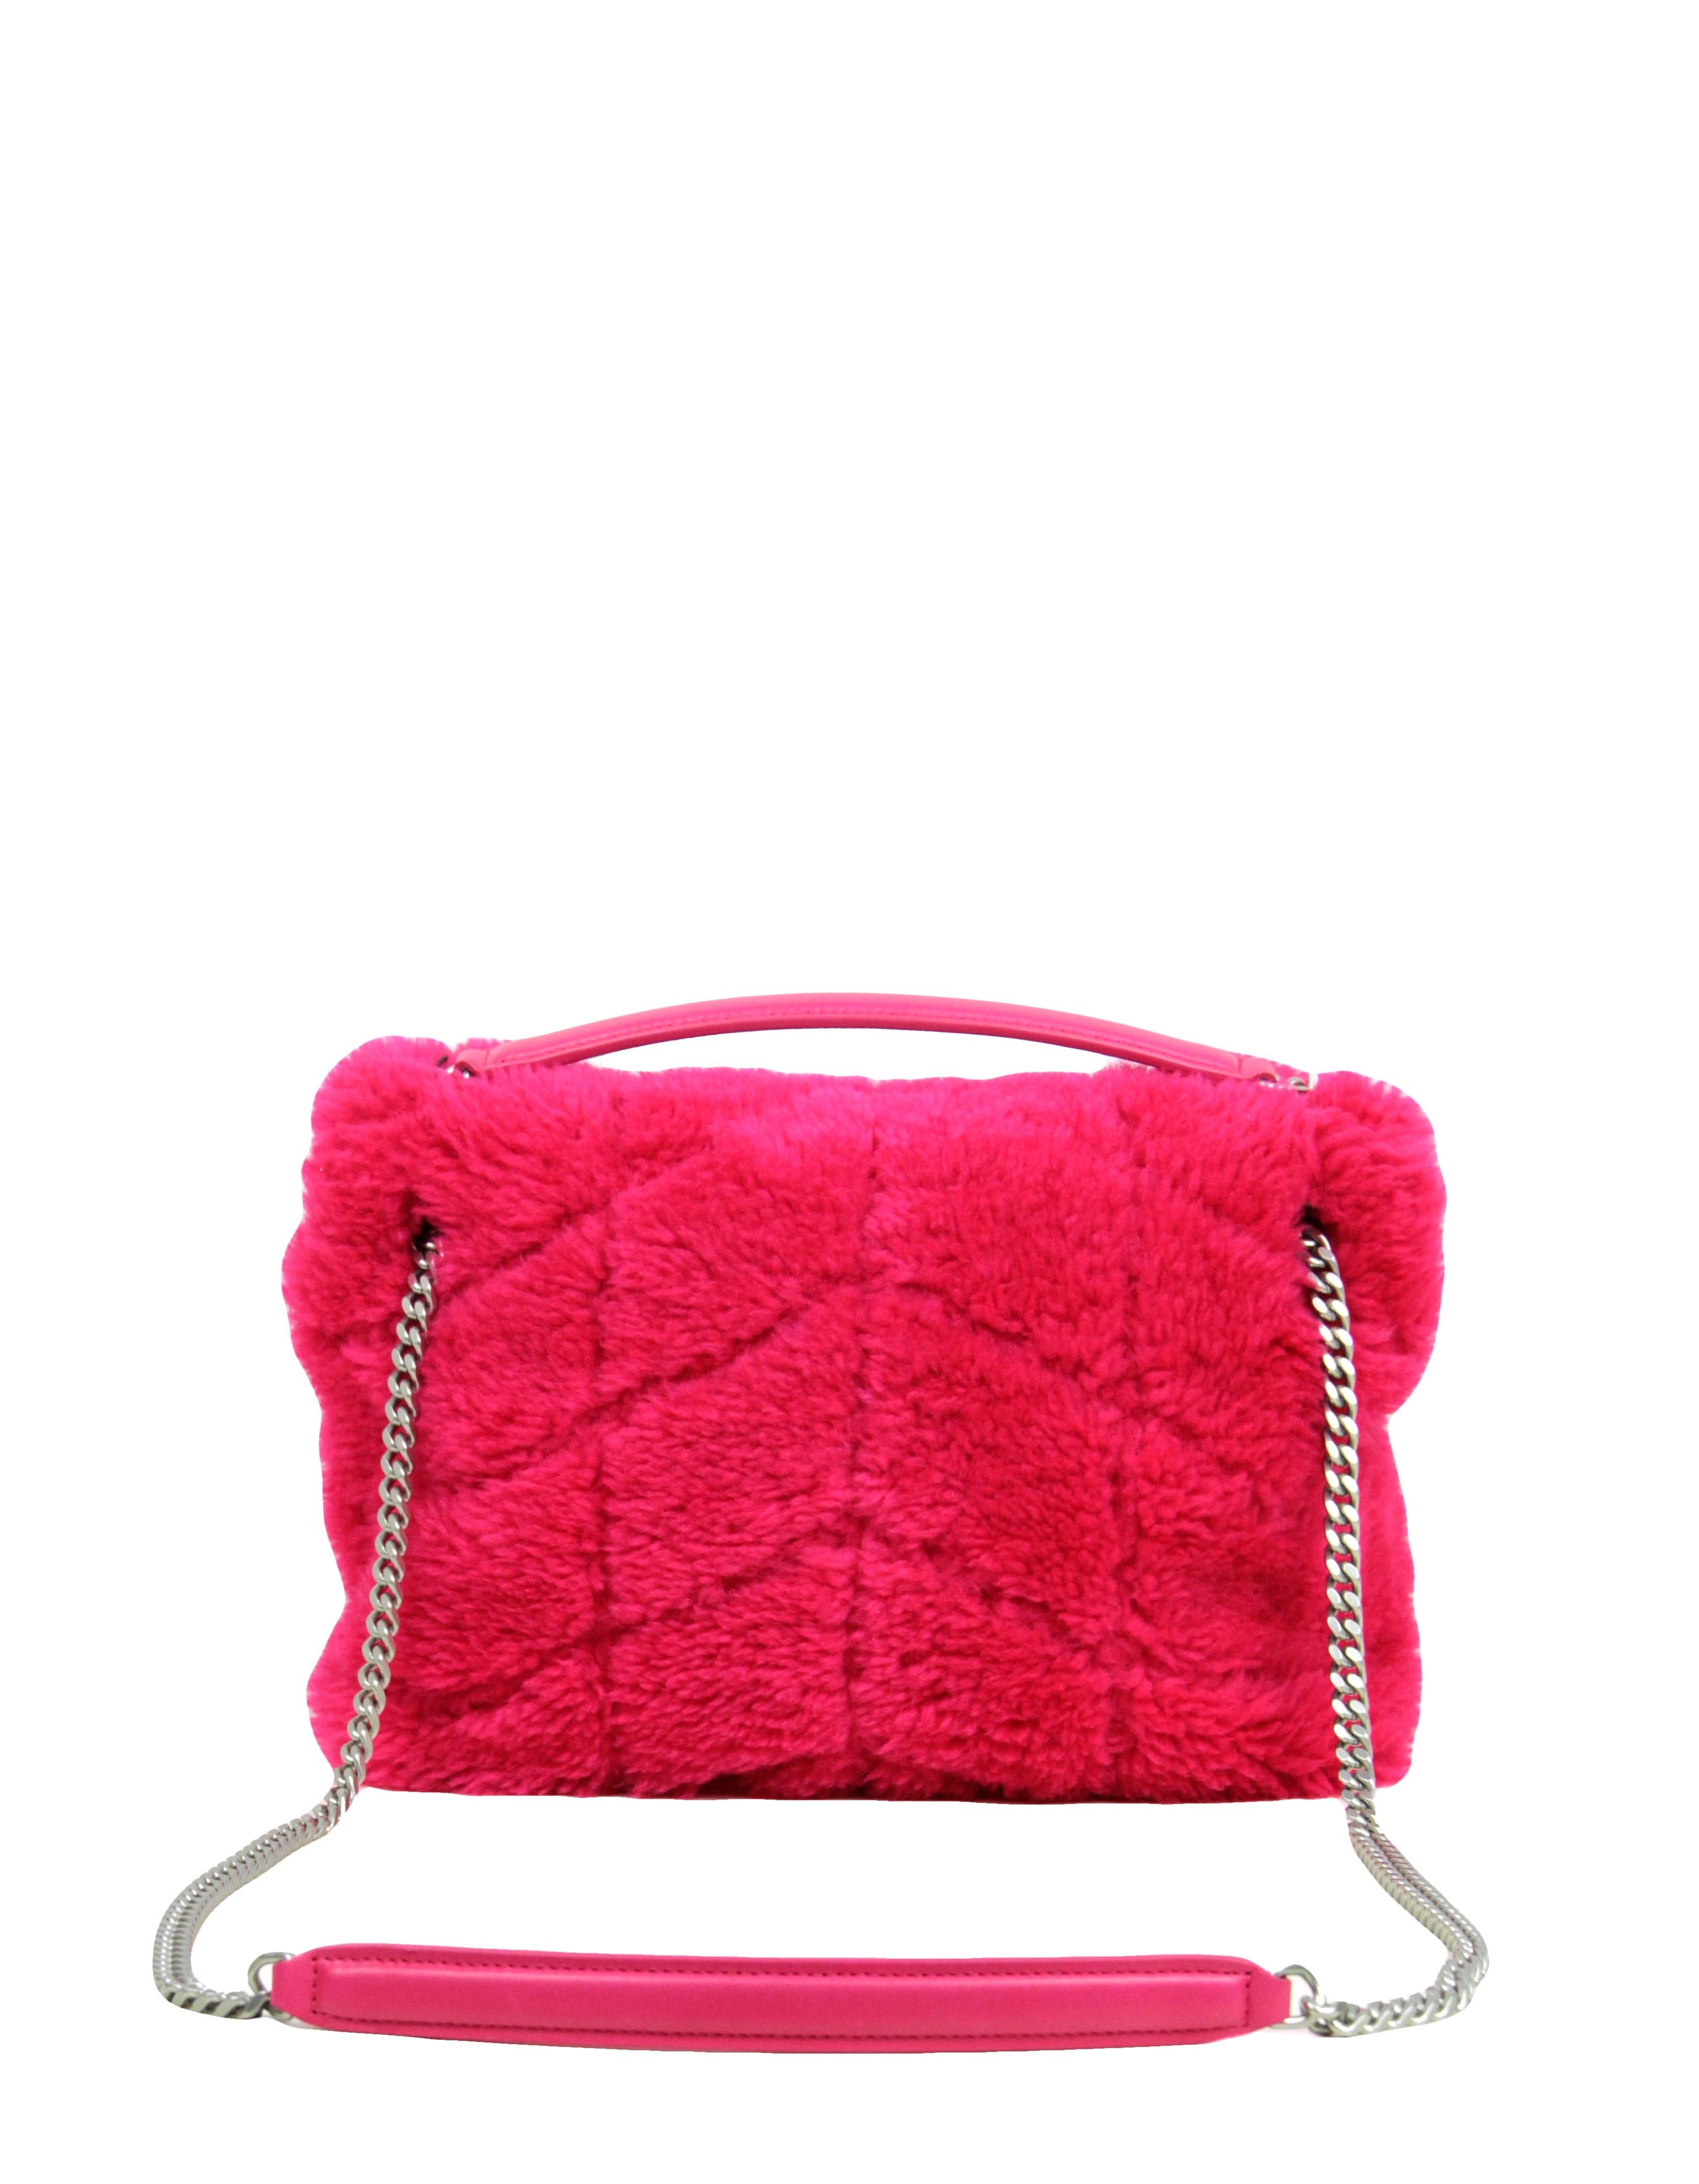 ysl pink fur bag